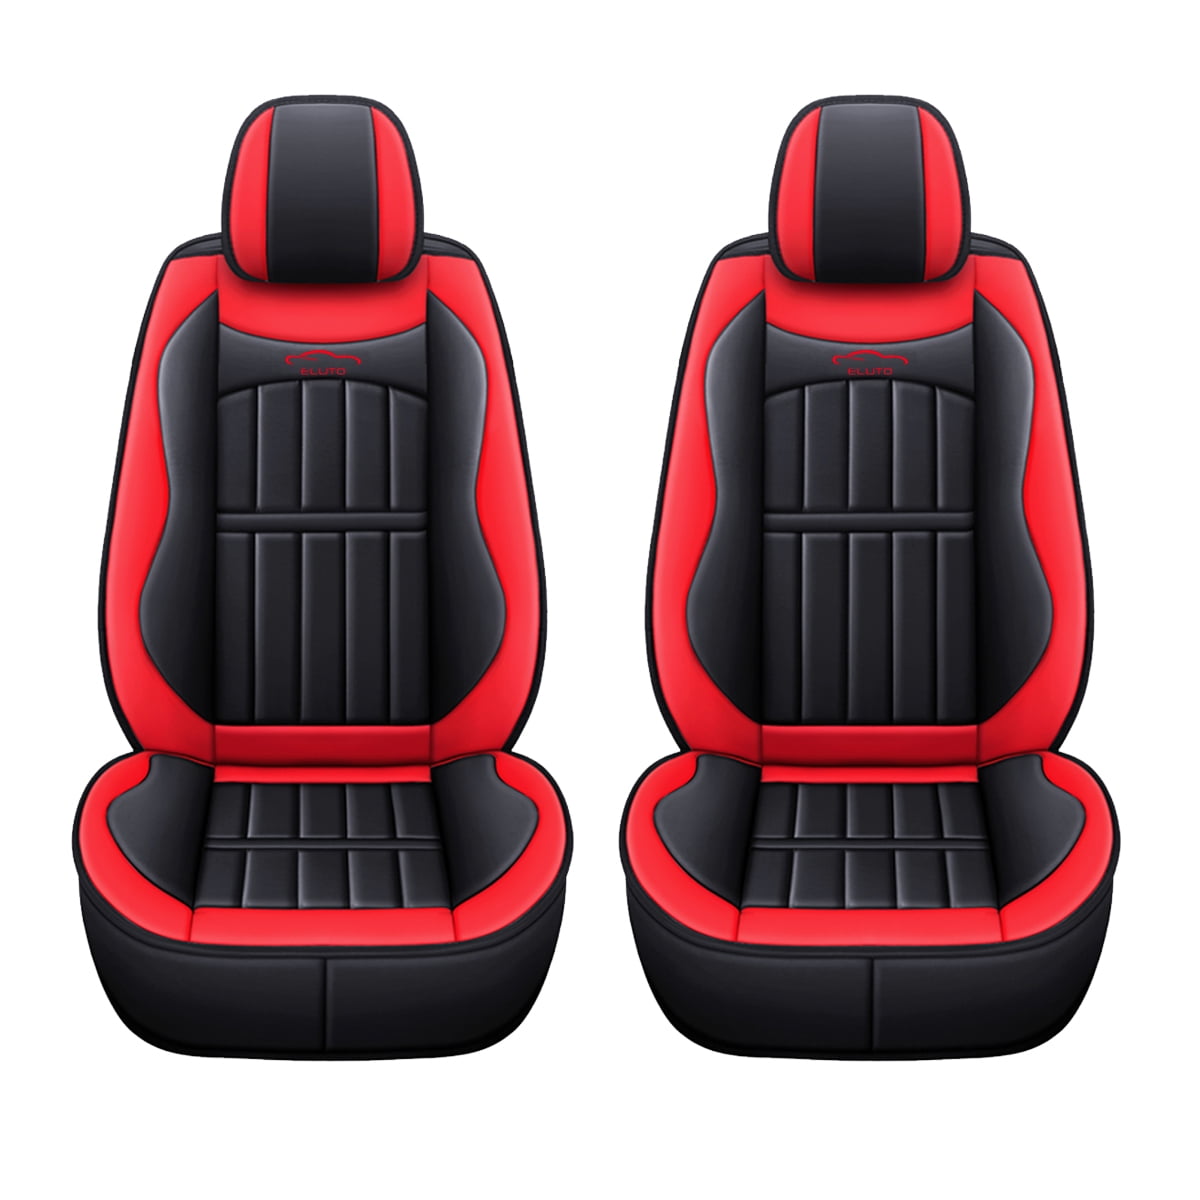 Eluto 5 Seats Car Seat Cover Full Set, Waterproof Leather Car Seat